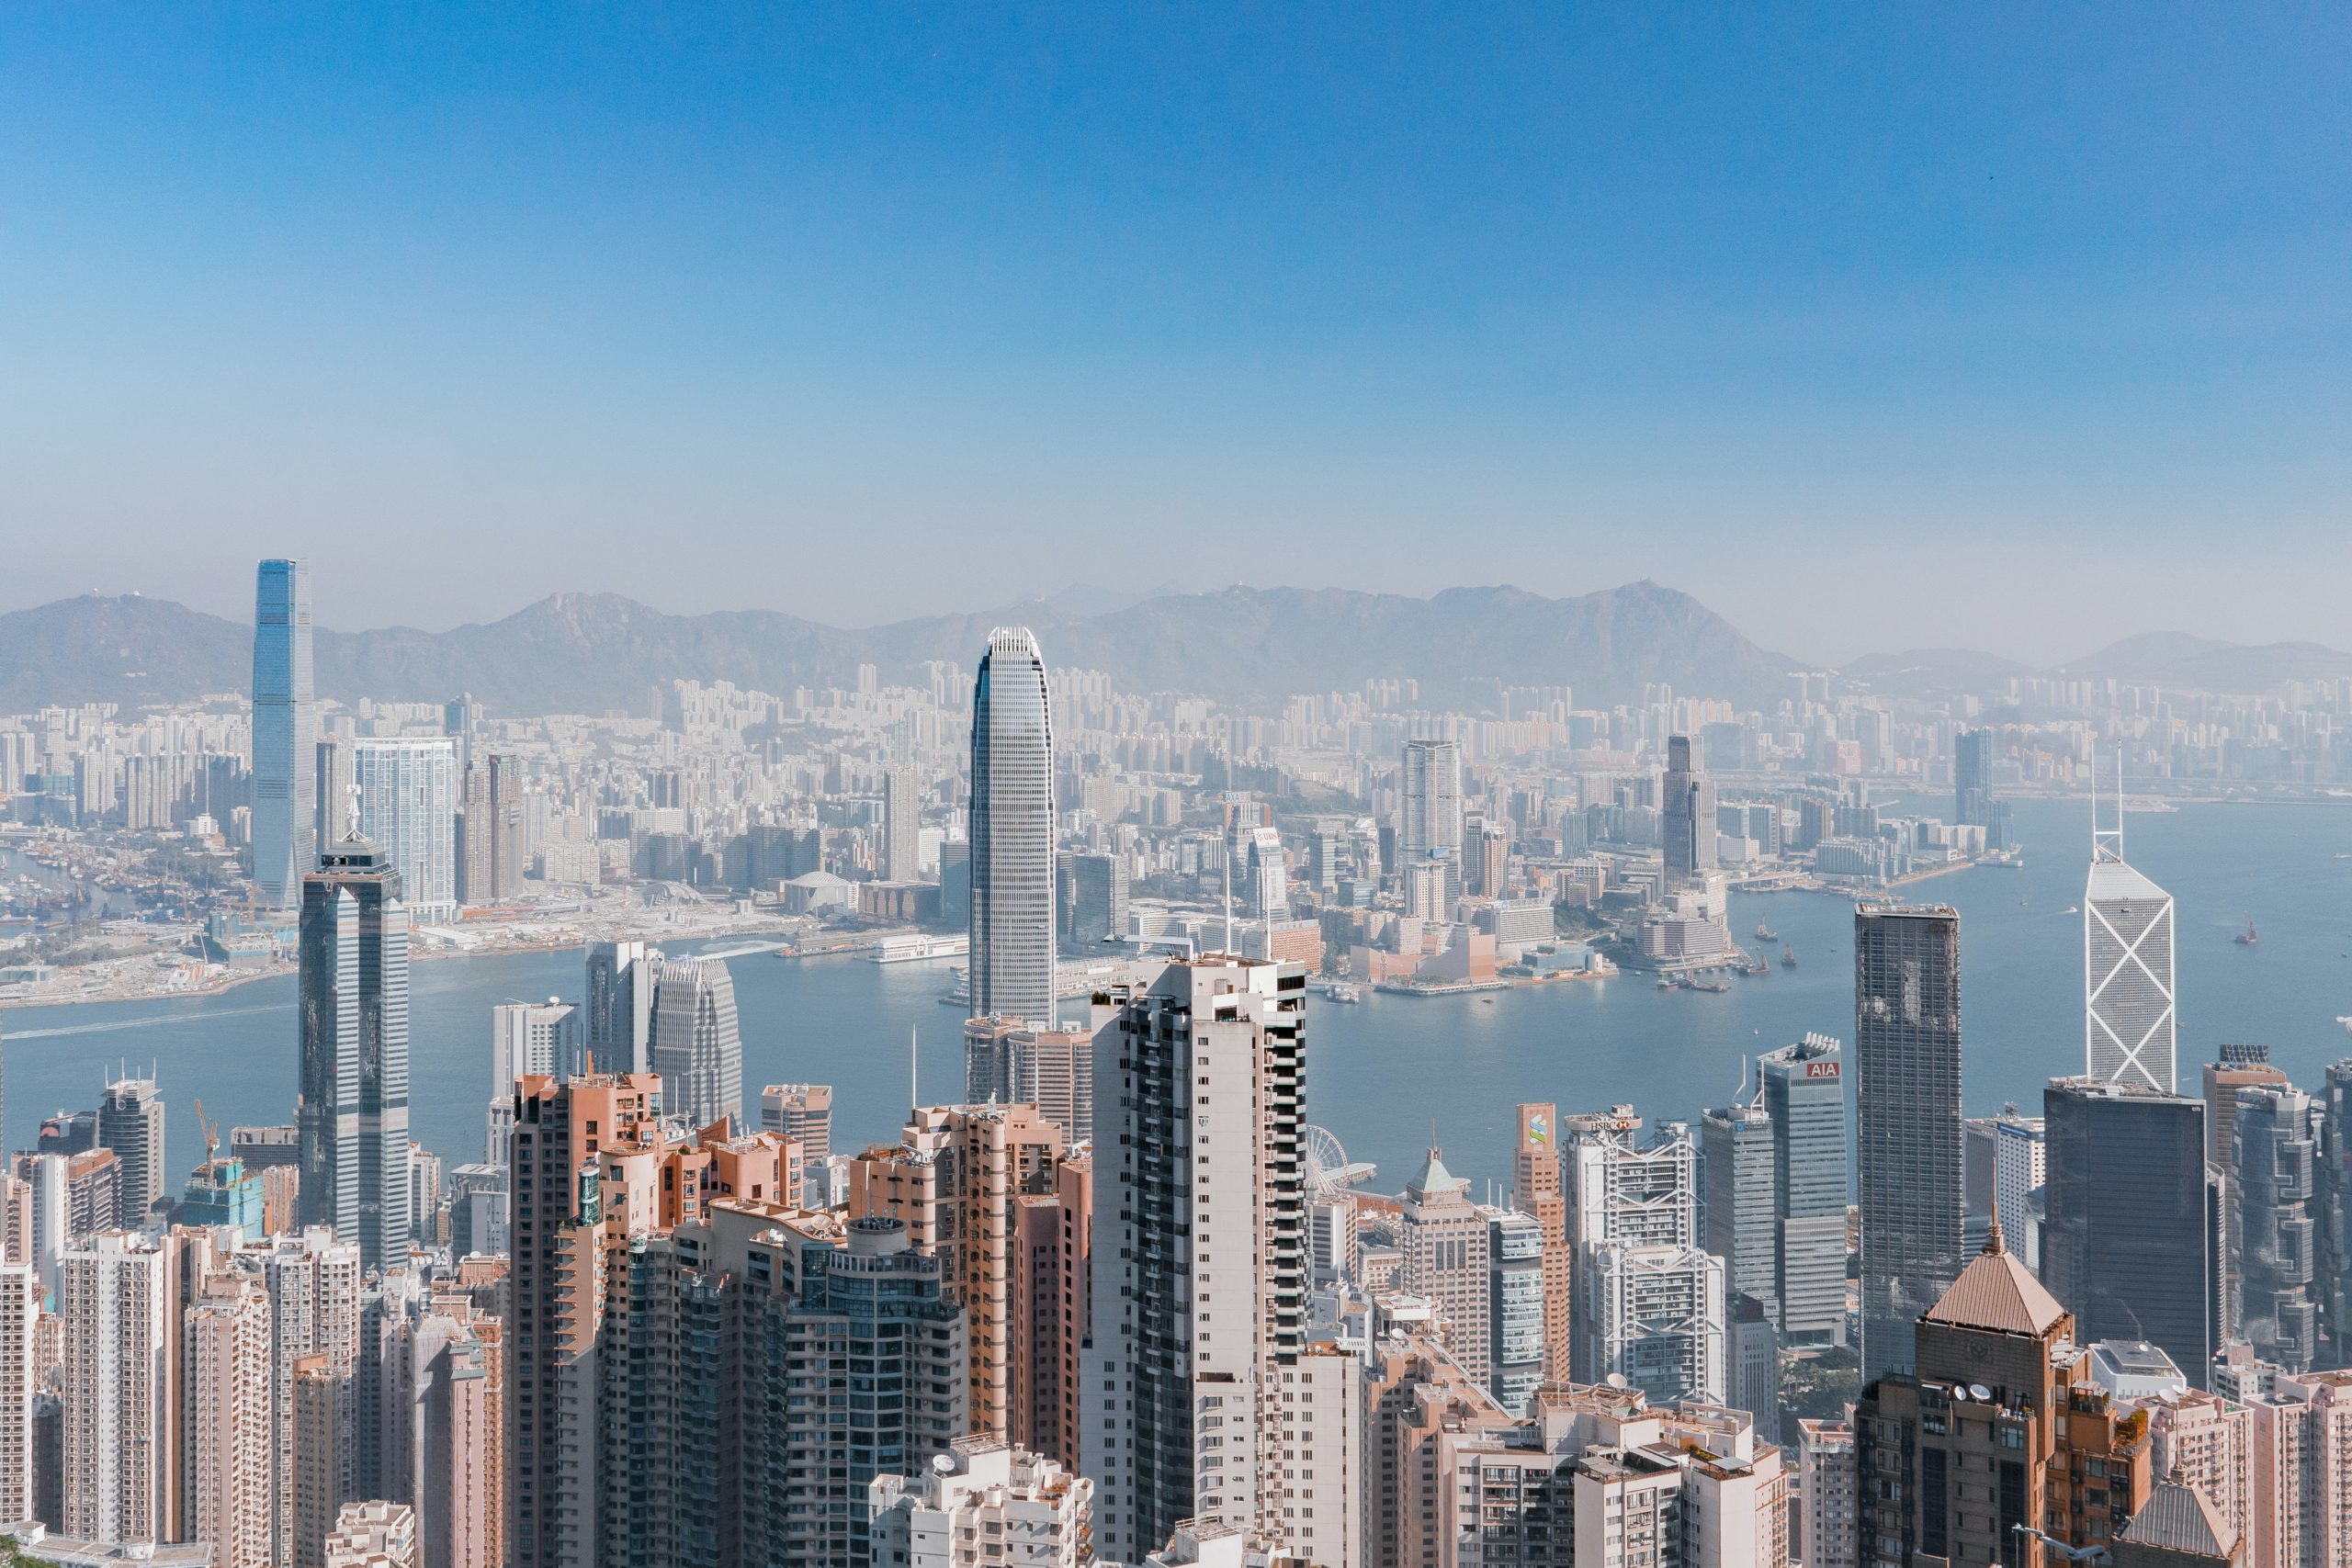 Singapore’s GIC injects USD 70 million into Hong Kong-listed digital asset platform BC Group